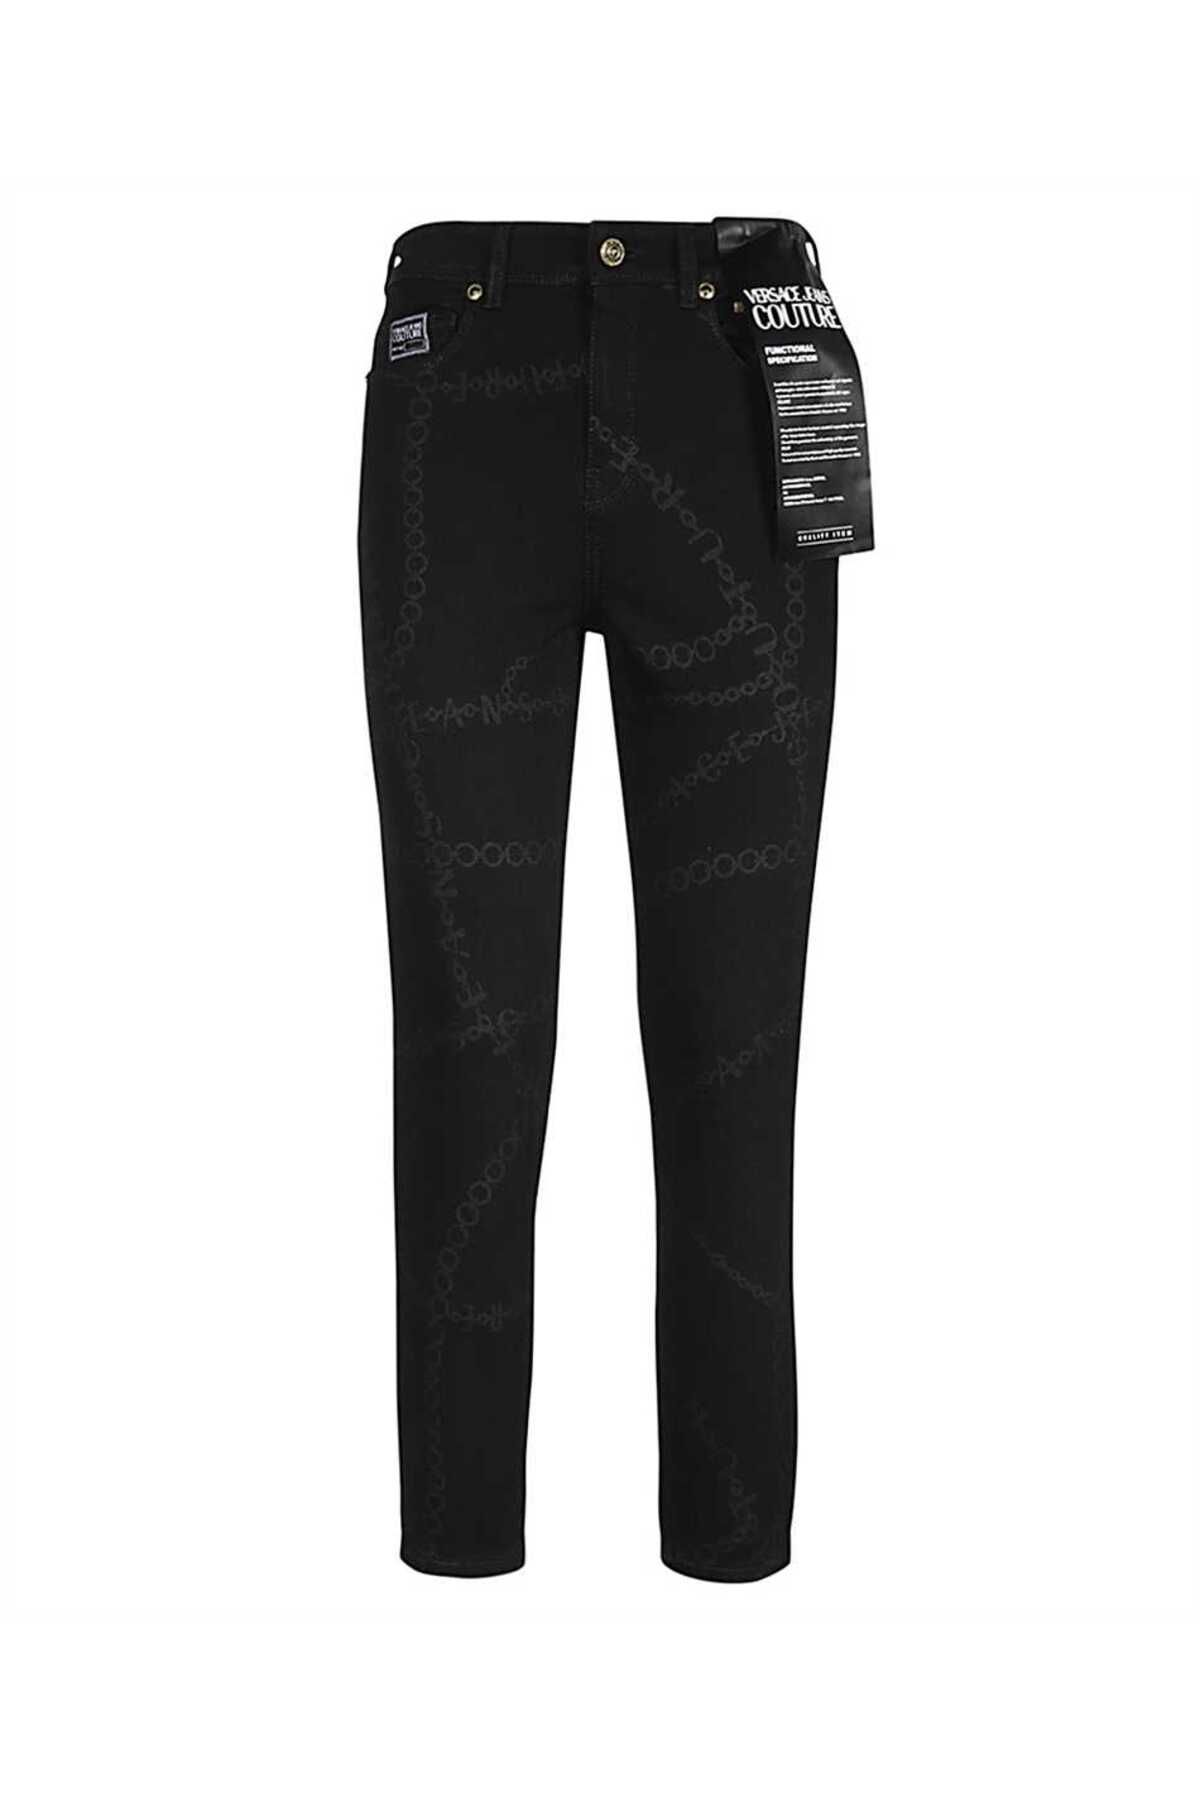 Versace Kadın Slim Fit Normal Bel Pamuklu Siyah Jeans 75HAB5X0DS010L54-909